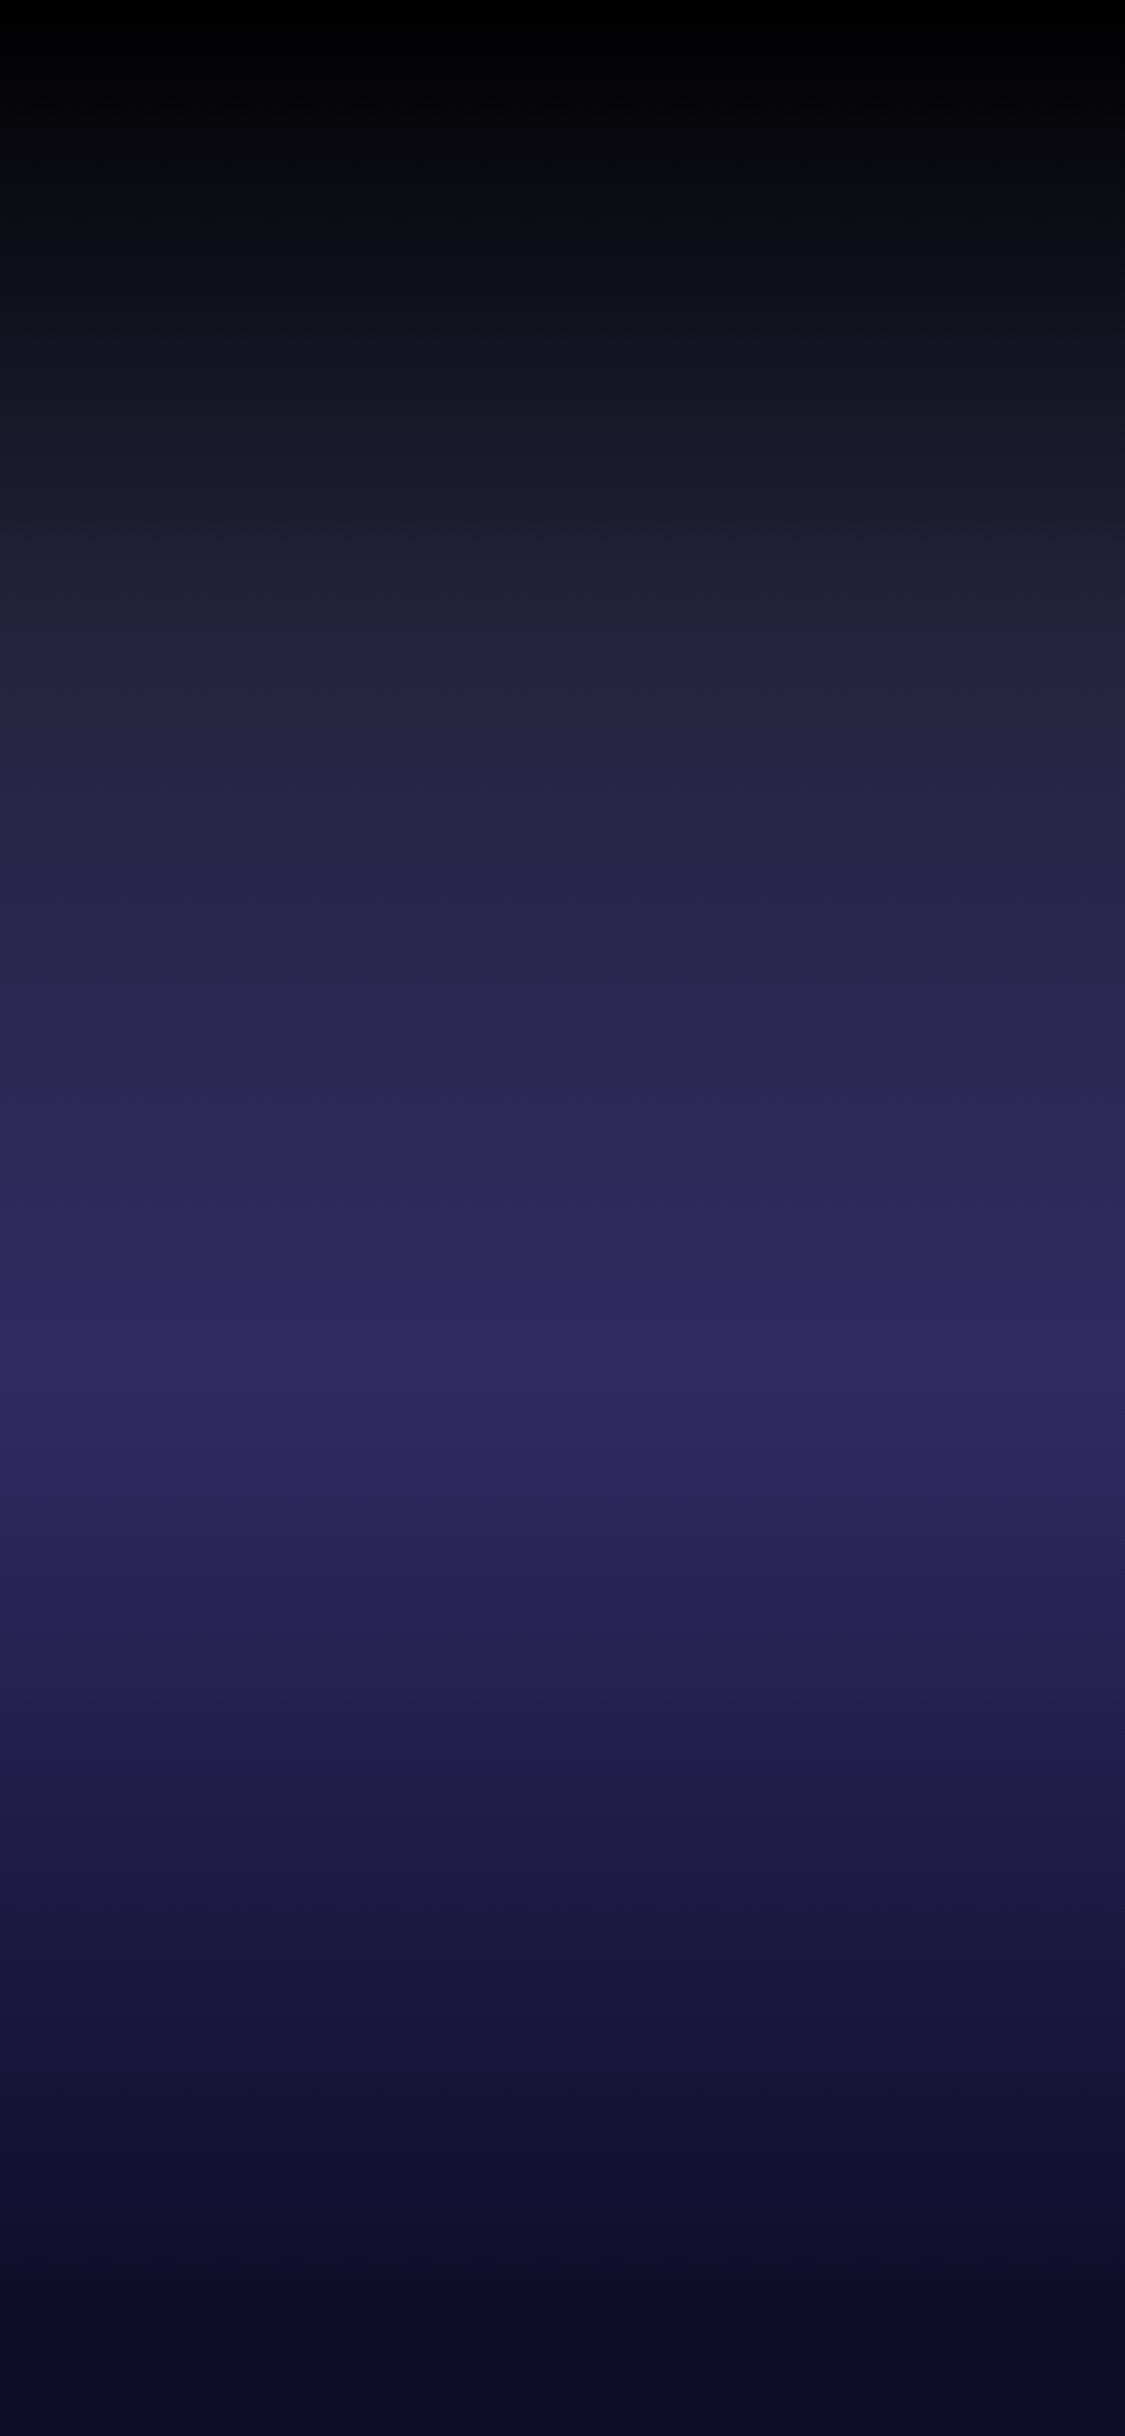 gradient iphone wallpaper,blue,black,purple,violet,sky